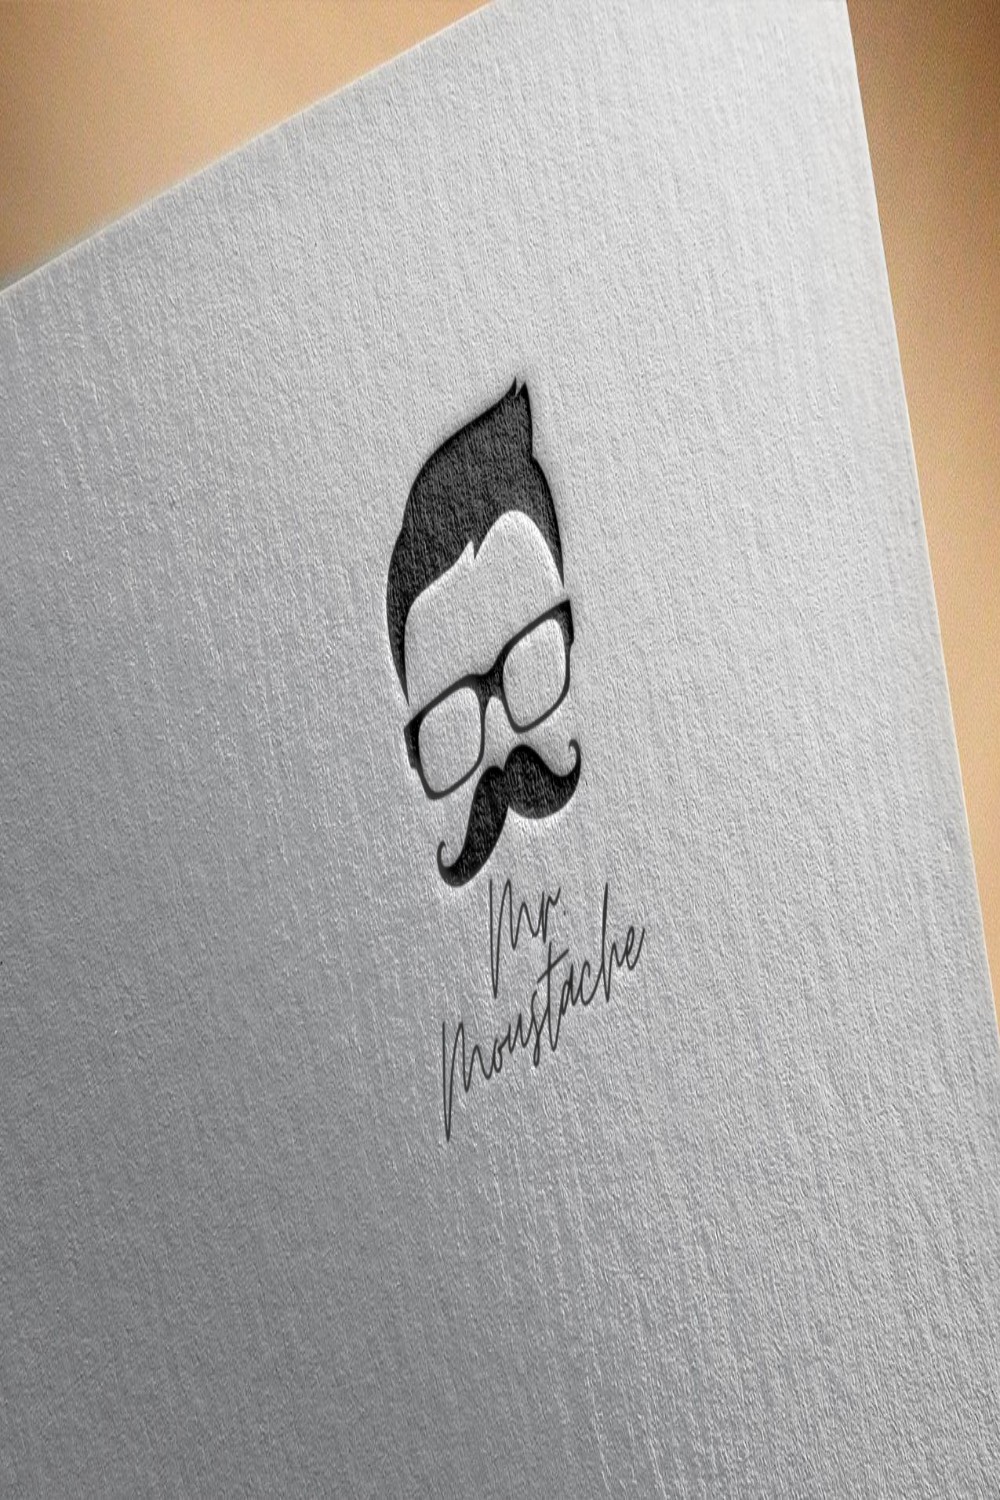 Mr Moustache Logo Design pinterest image.